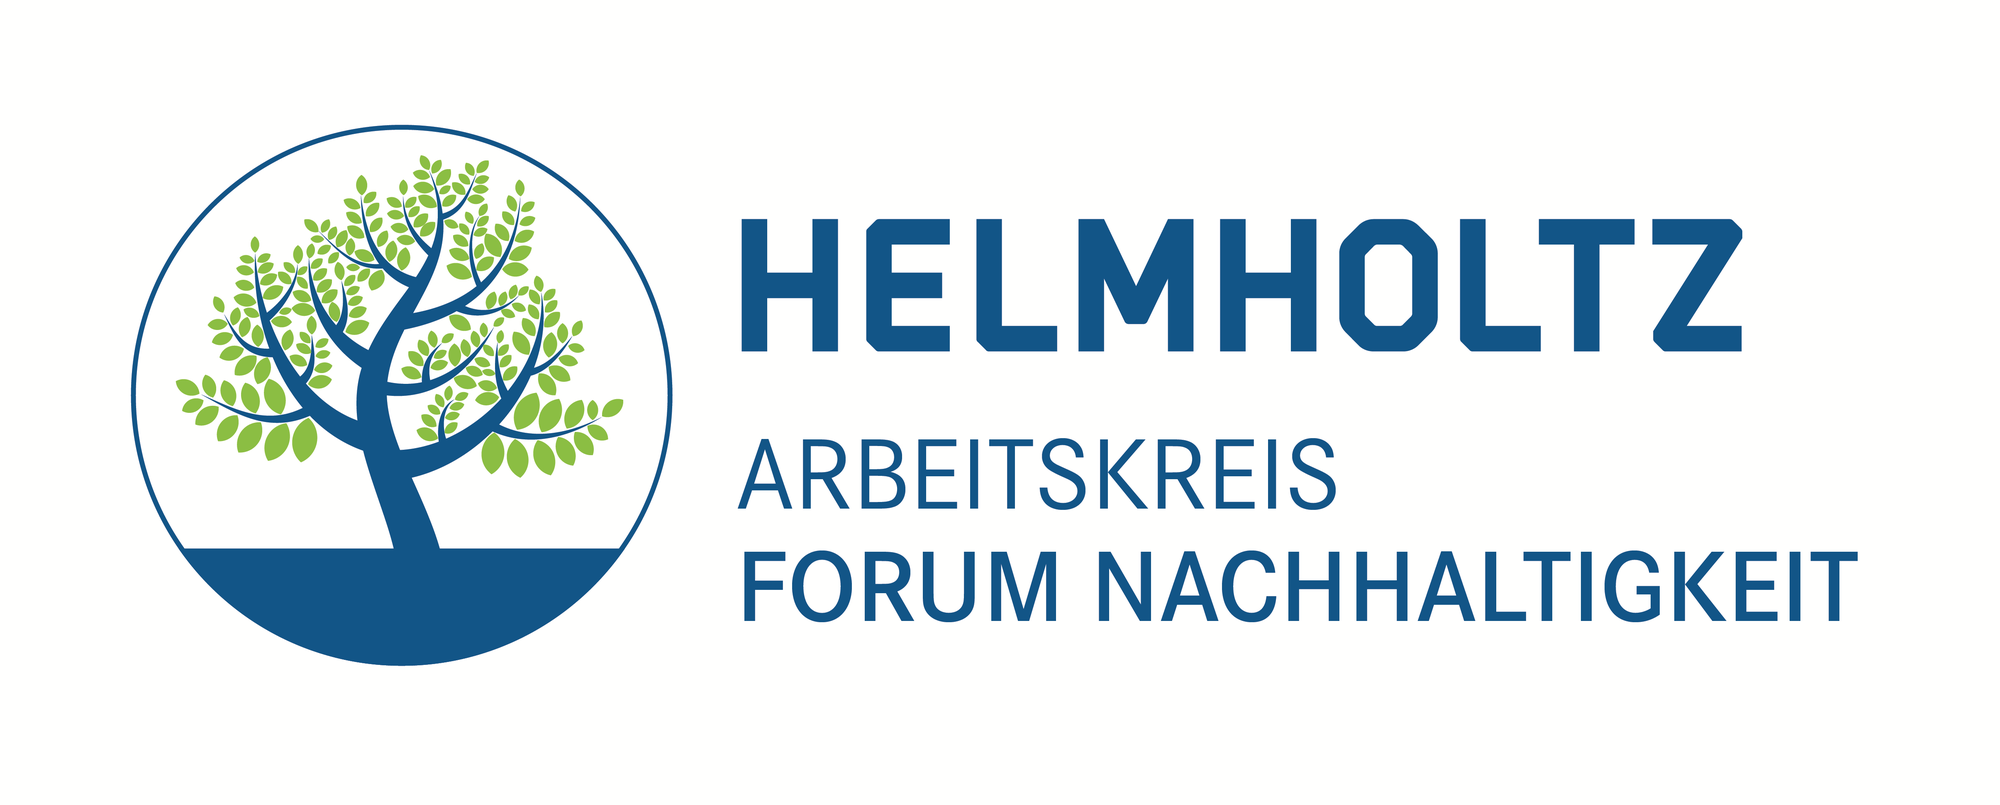 Helmholtz Arbeitskreis Forum Nachhaltigkeit